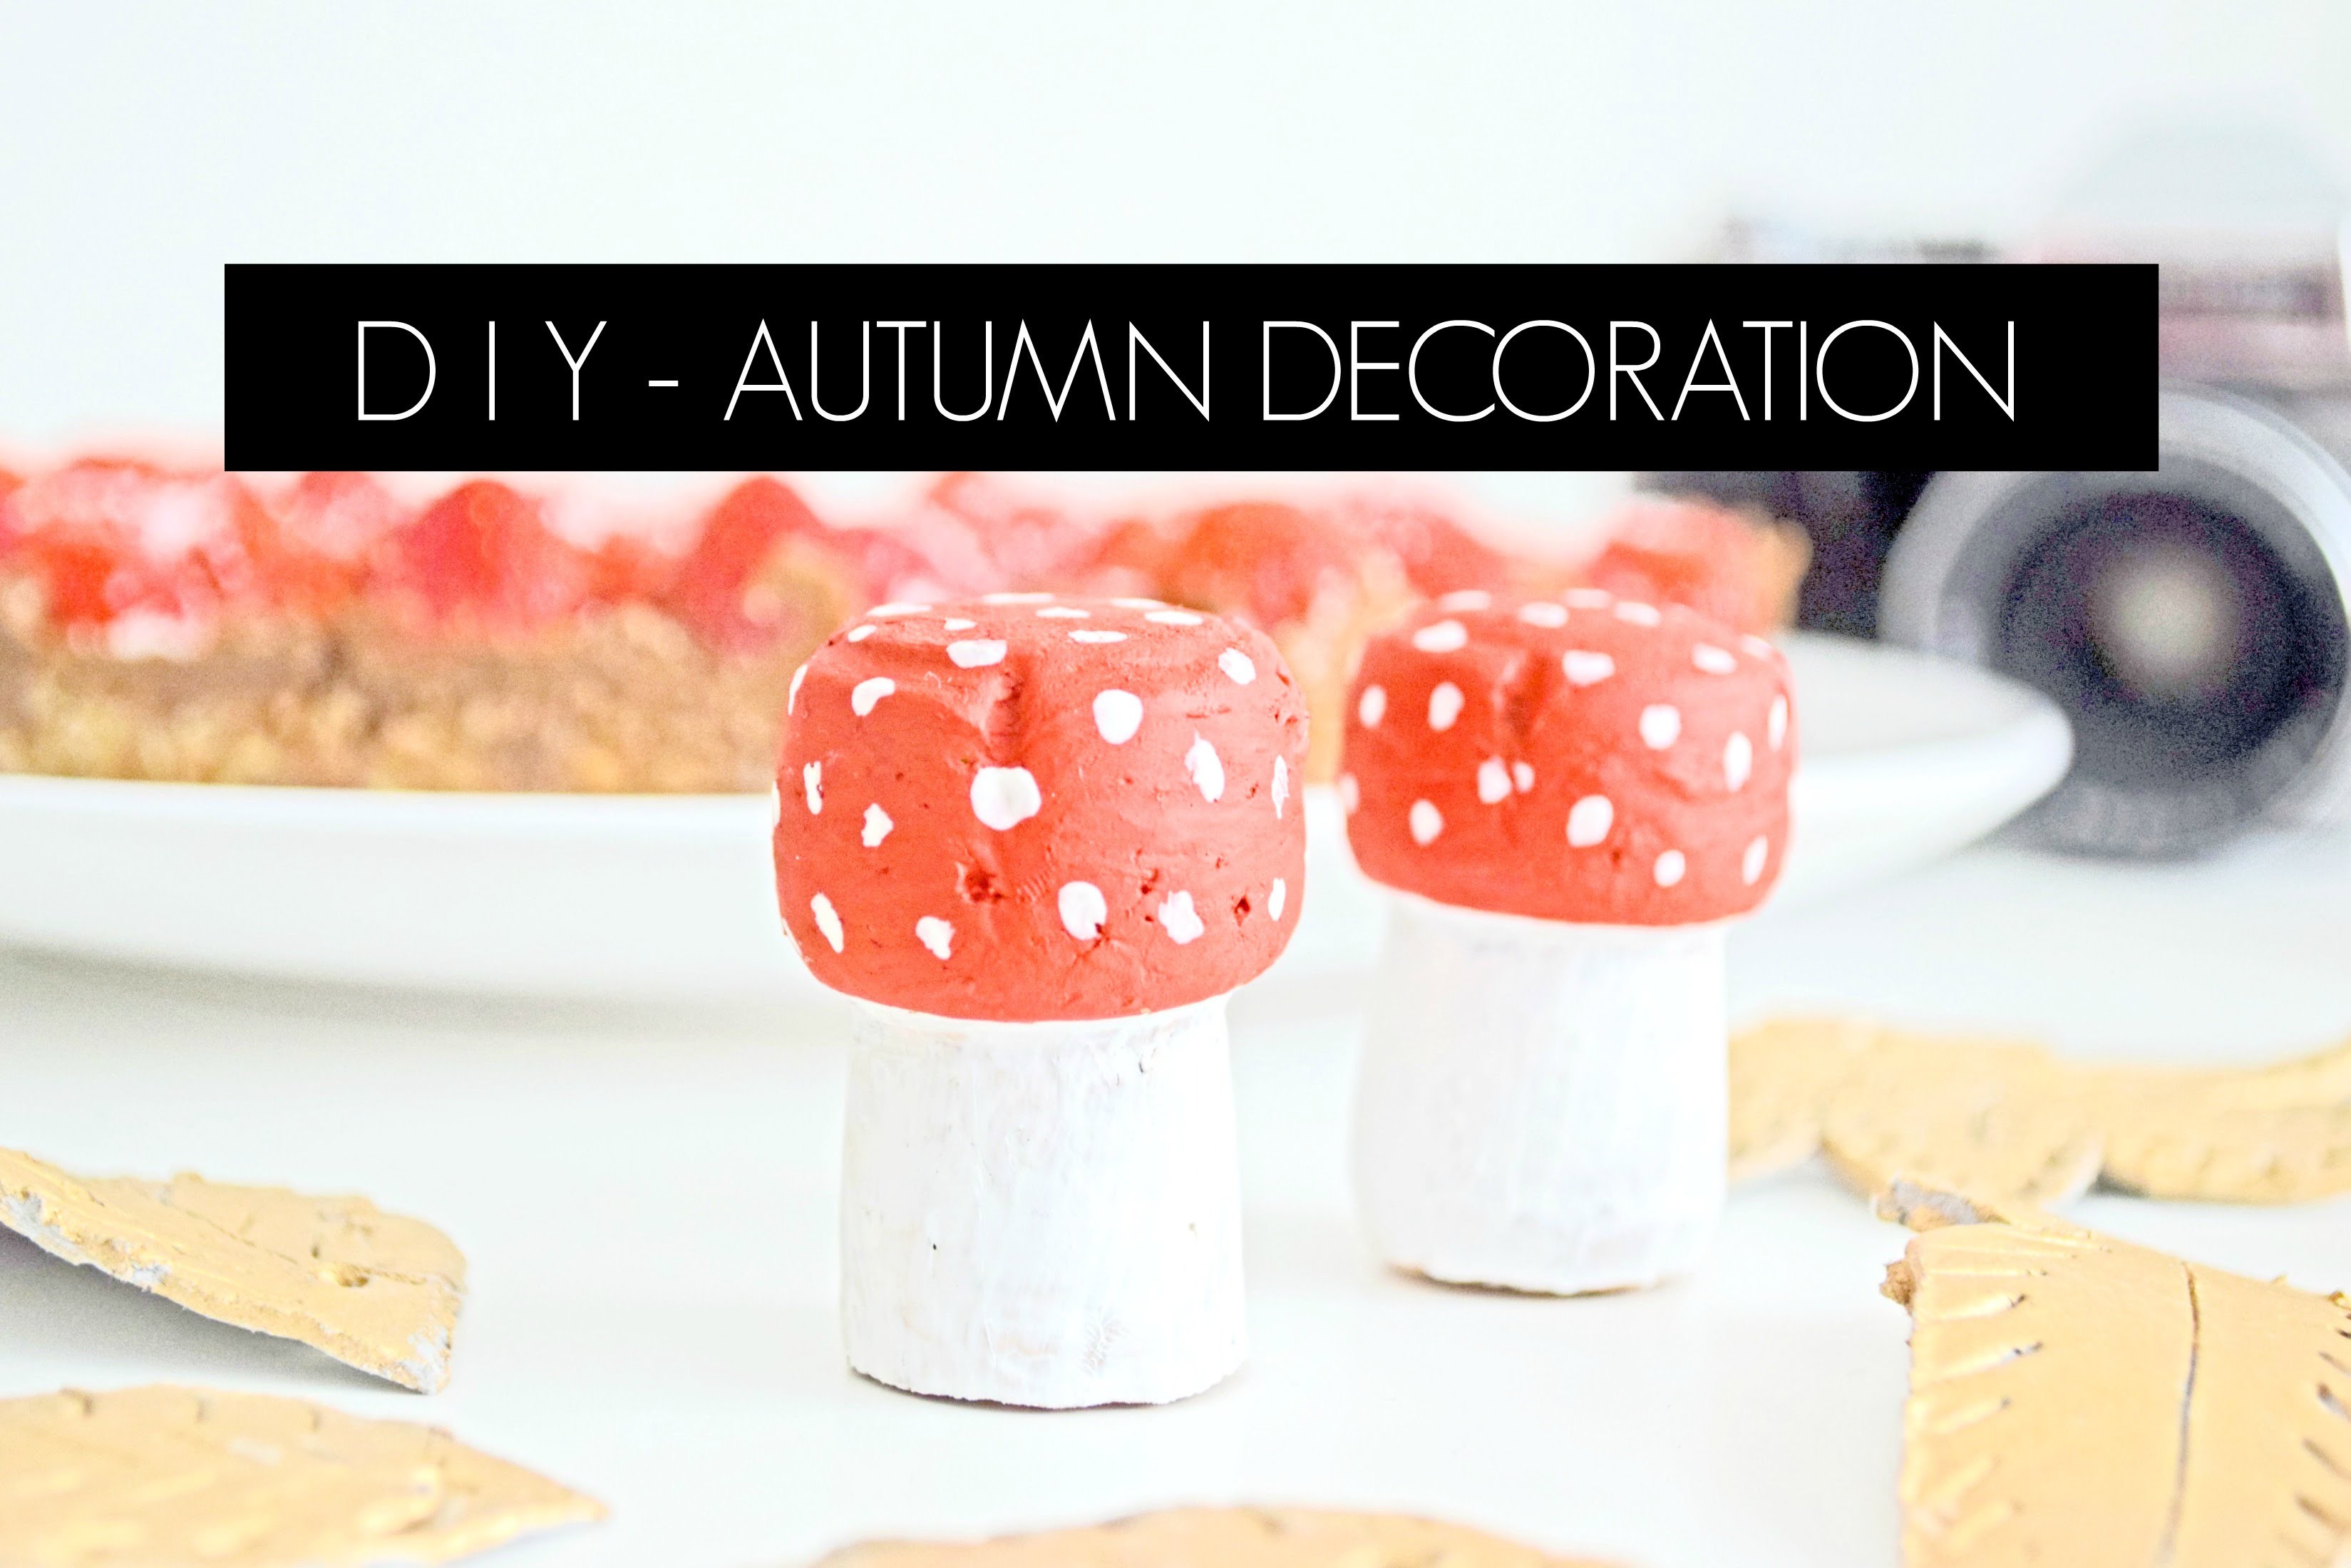 DIY szybka jesienna dekoracja